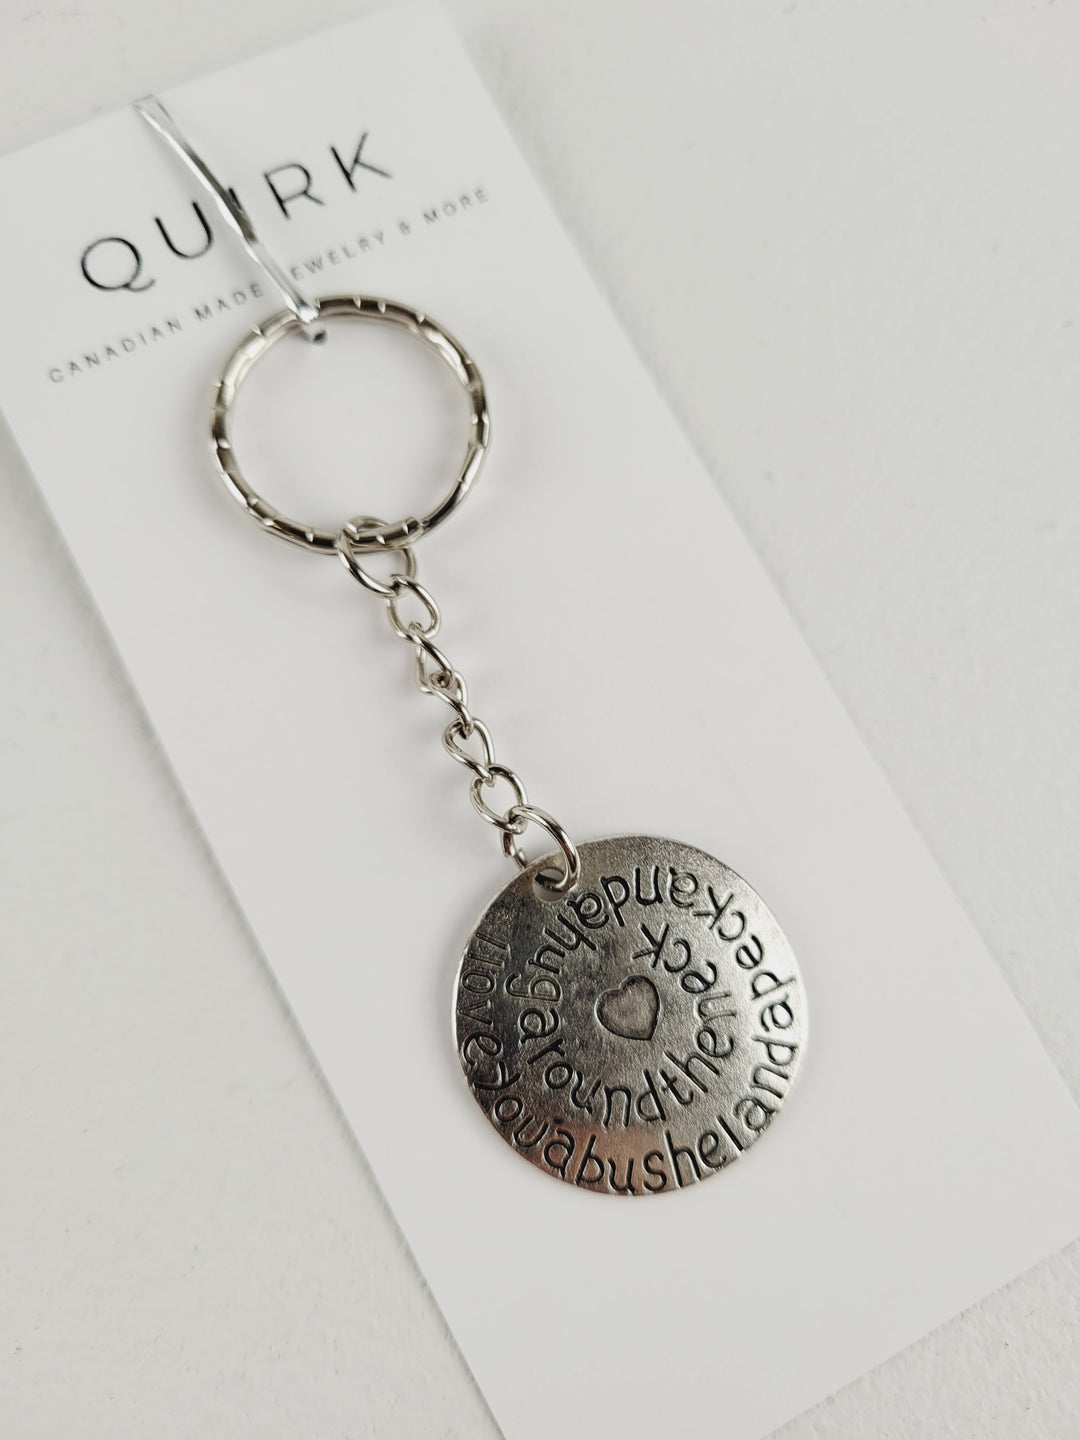 Quirk Handmade Jewelry, Keychains